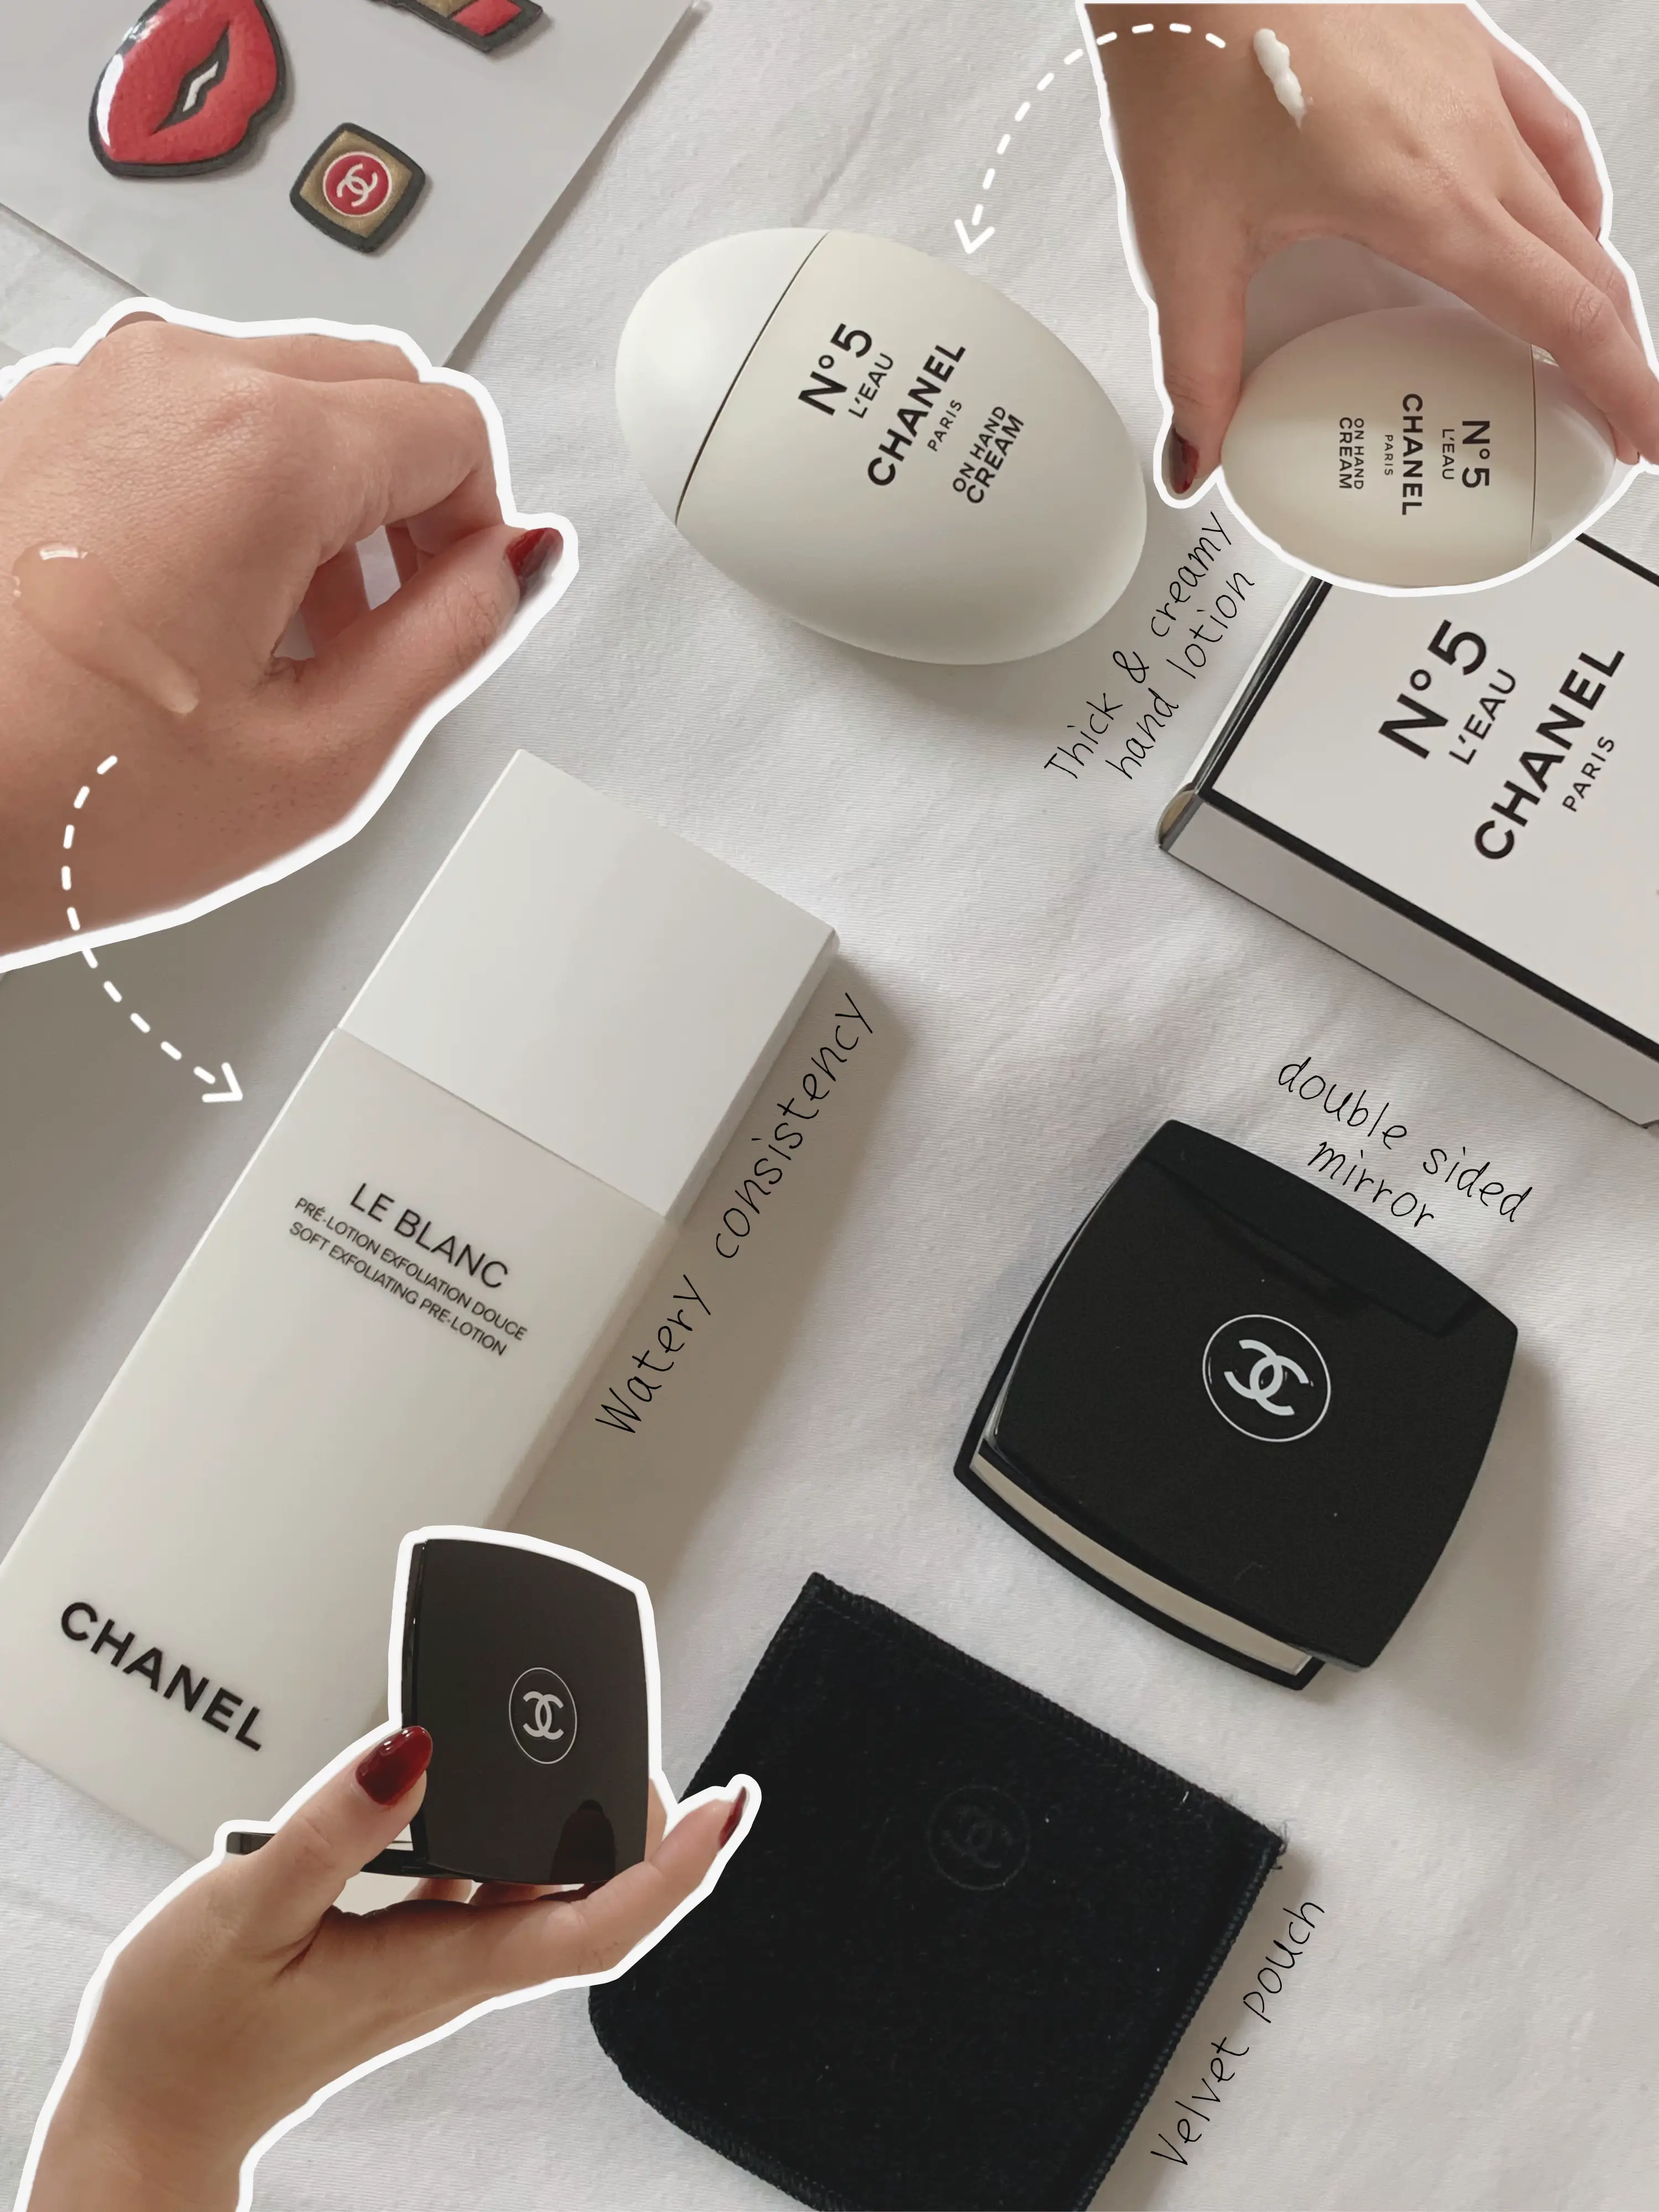 Chanel No 5 L'Eau On Hand Cream review  Hand cream, Beauty cream, Cream  aesthetic